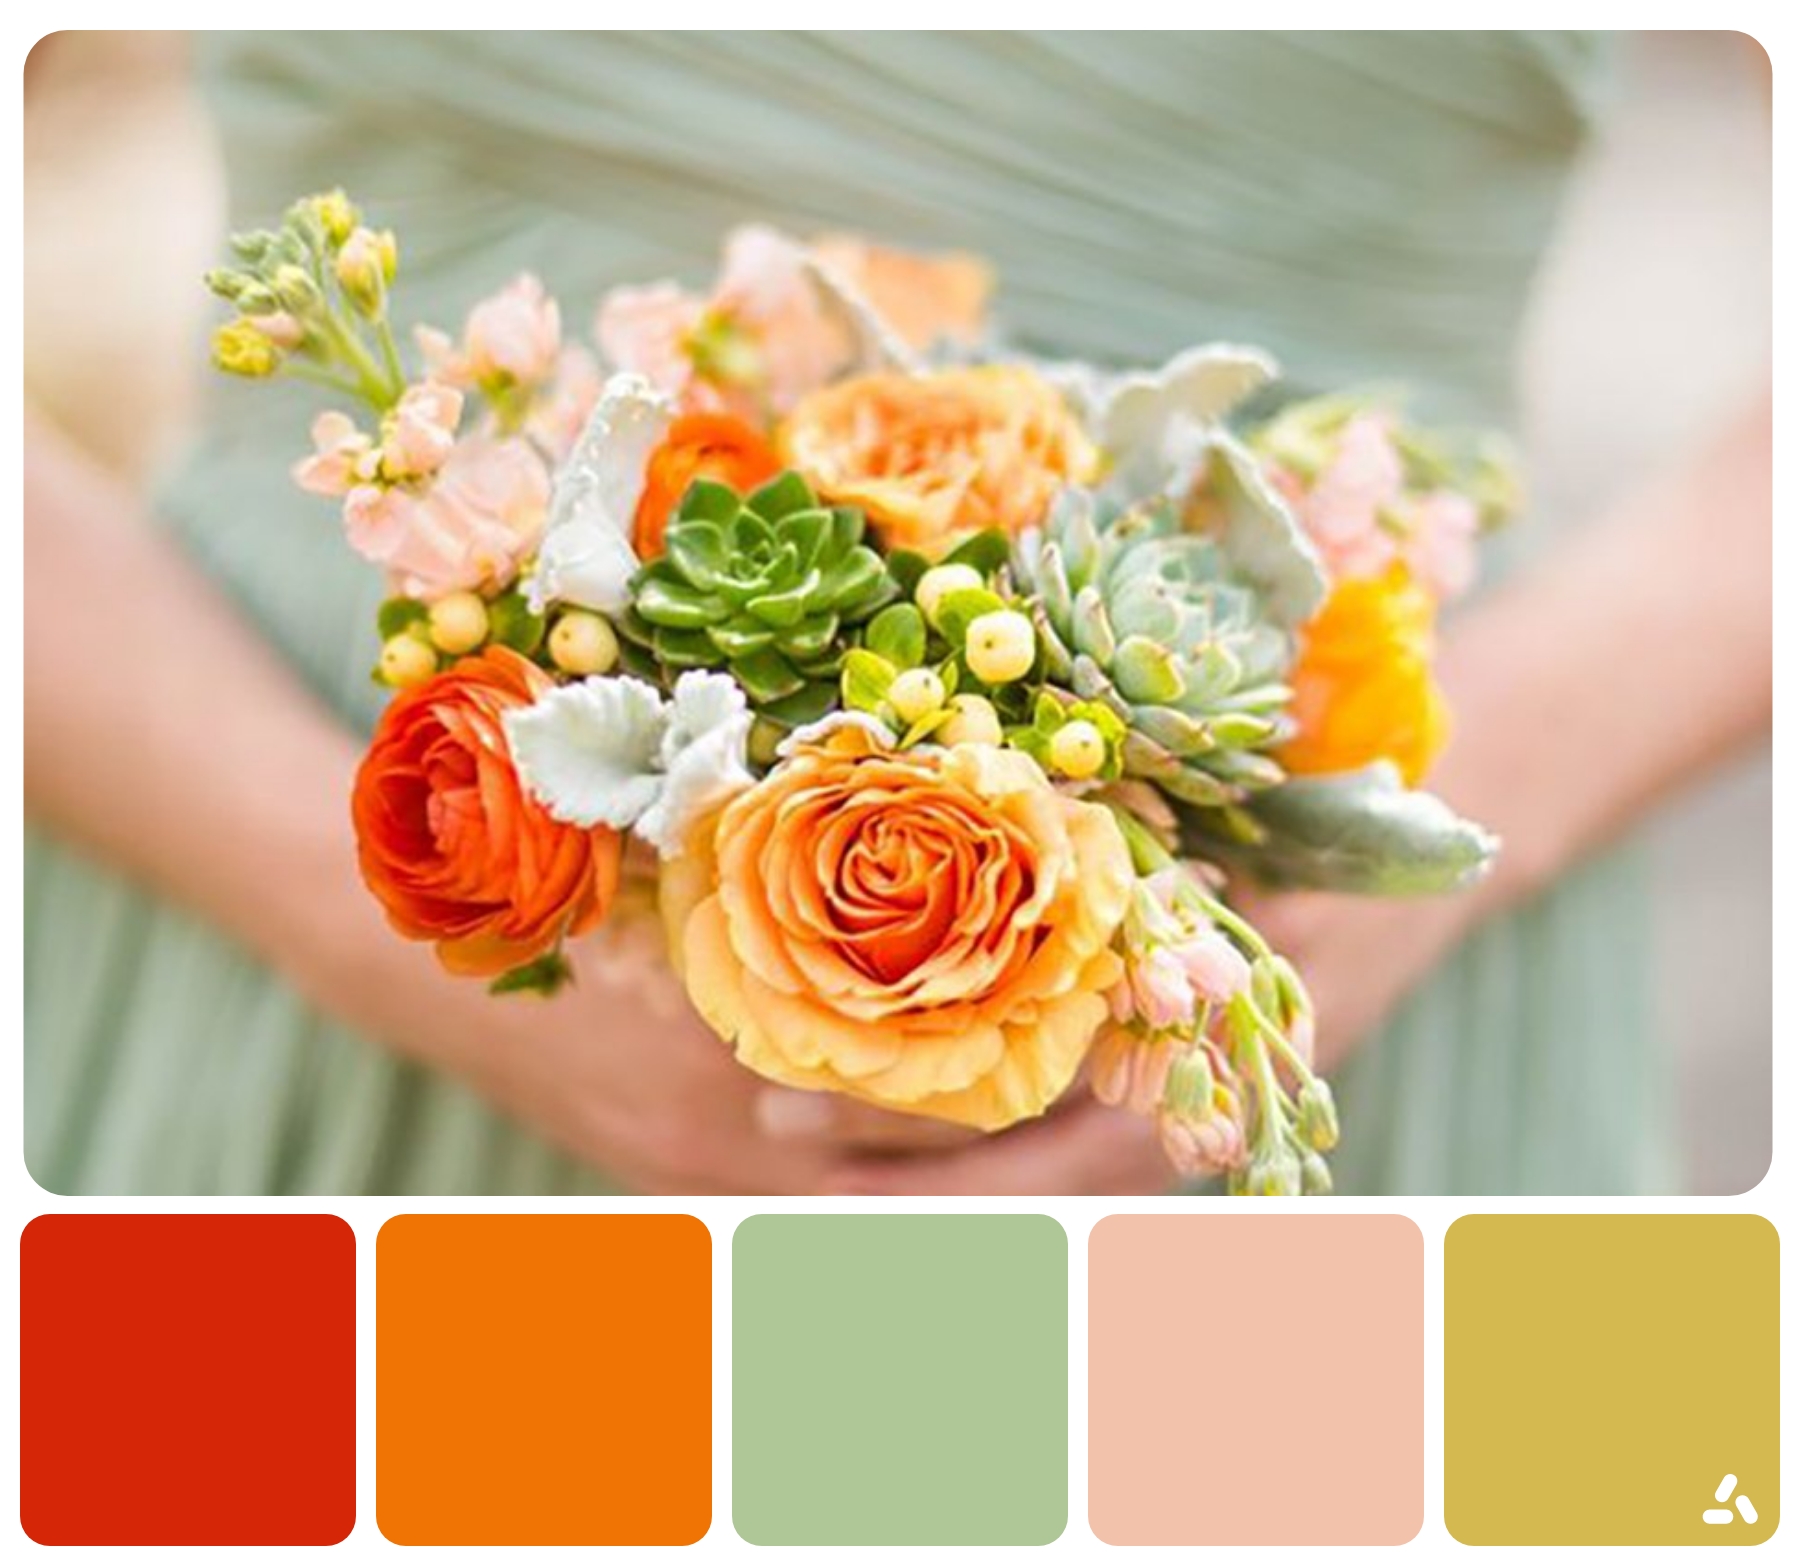 Color Palette Ideas For Spring Season | Inside Colors